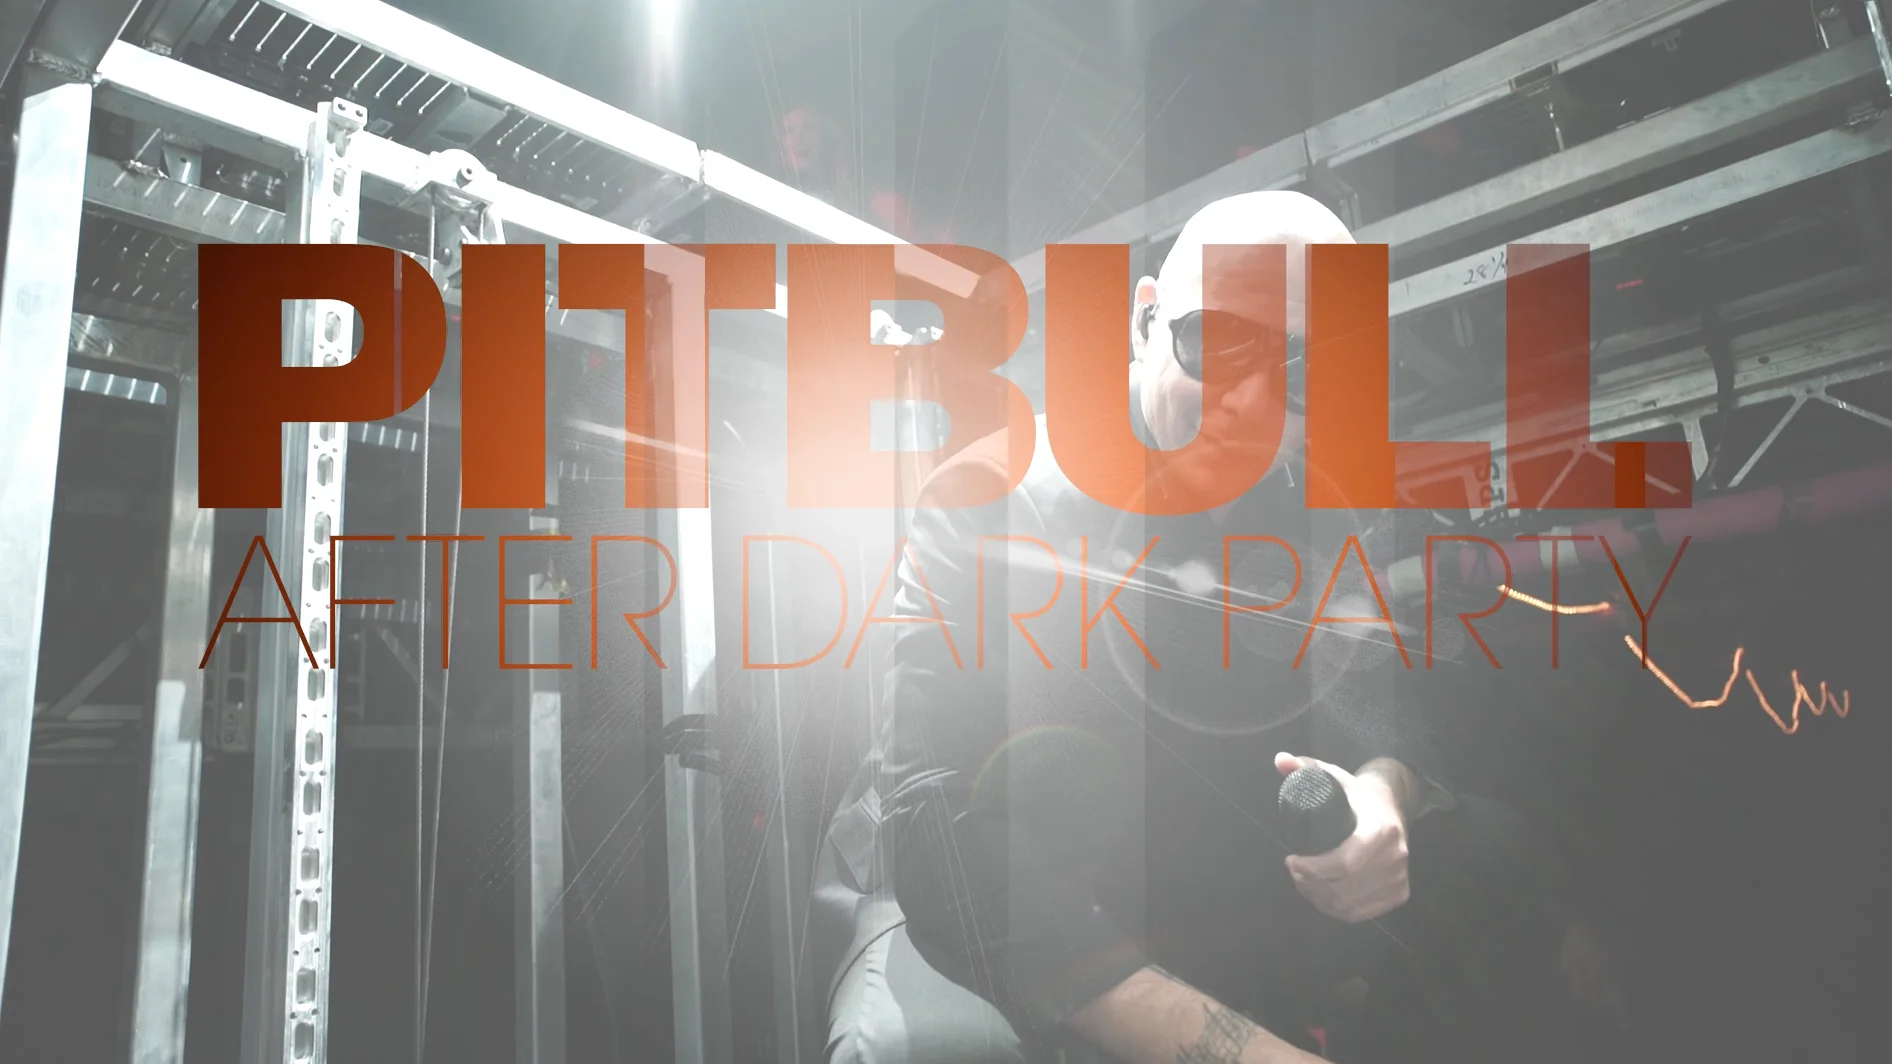 Pitbull After Dark Party on Vimeo